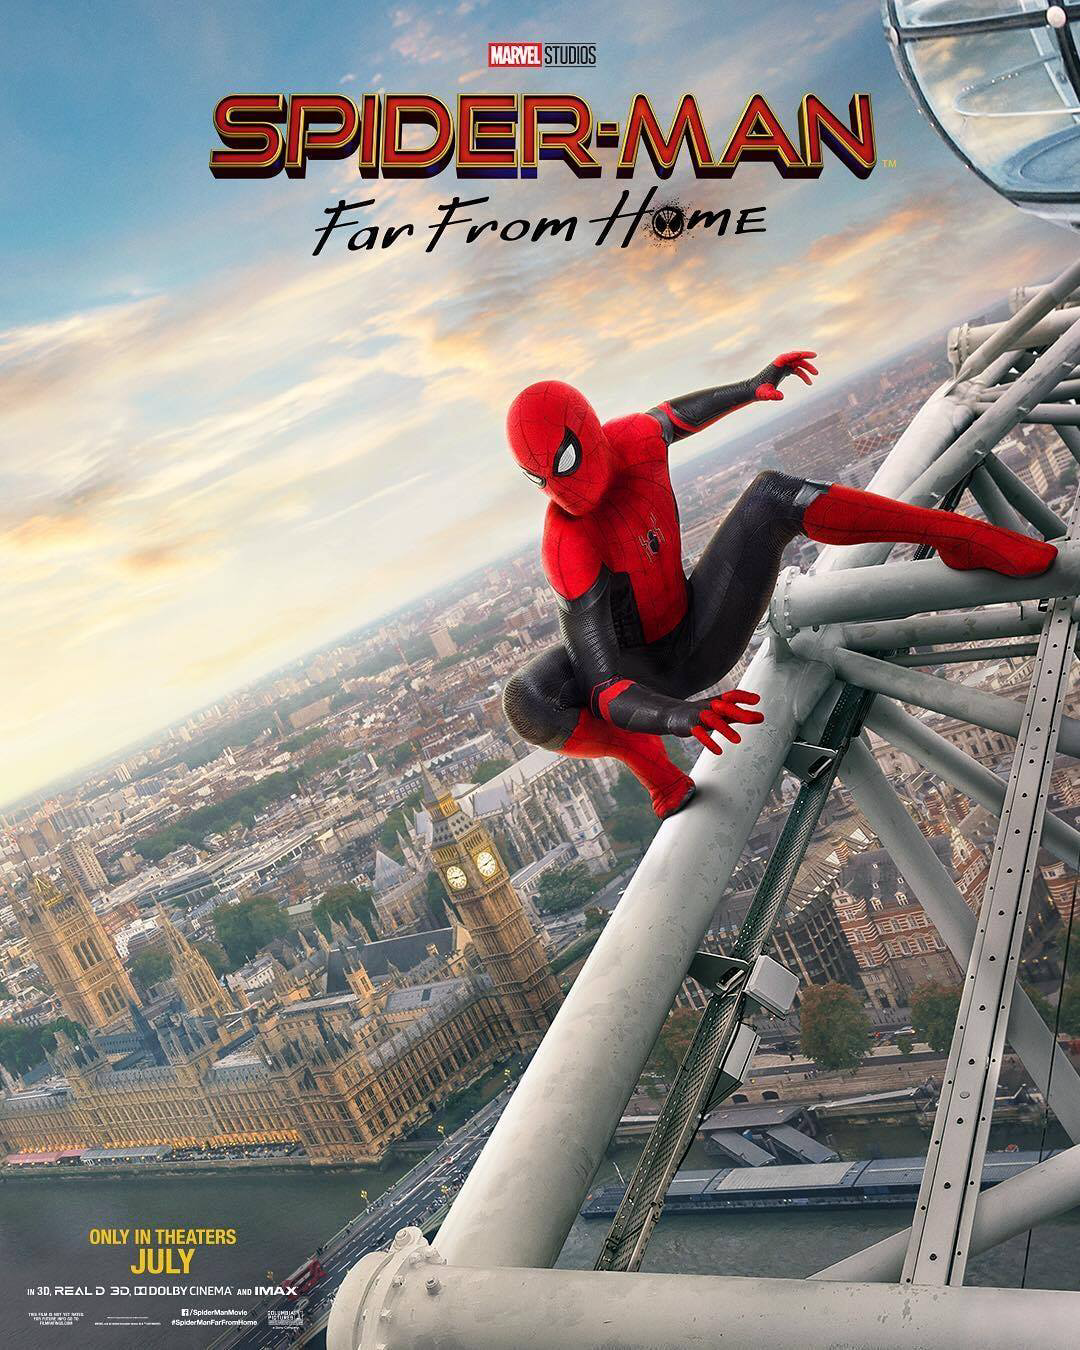 General 1080x1350 Spider-Man Peter Parker Tom Holland Marvel Cinematic Universe Marvel Comics movie poster